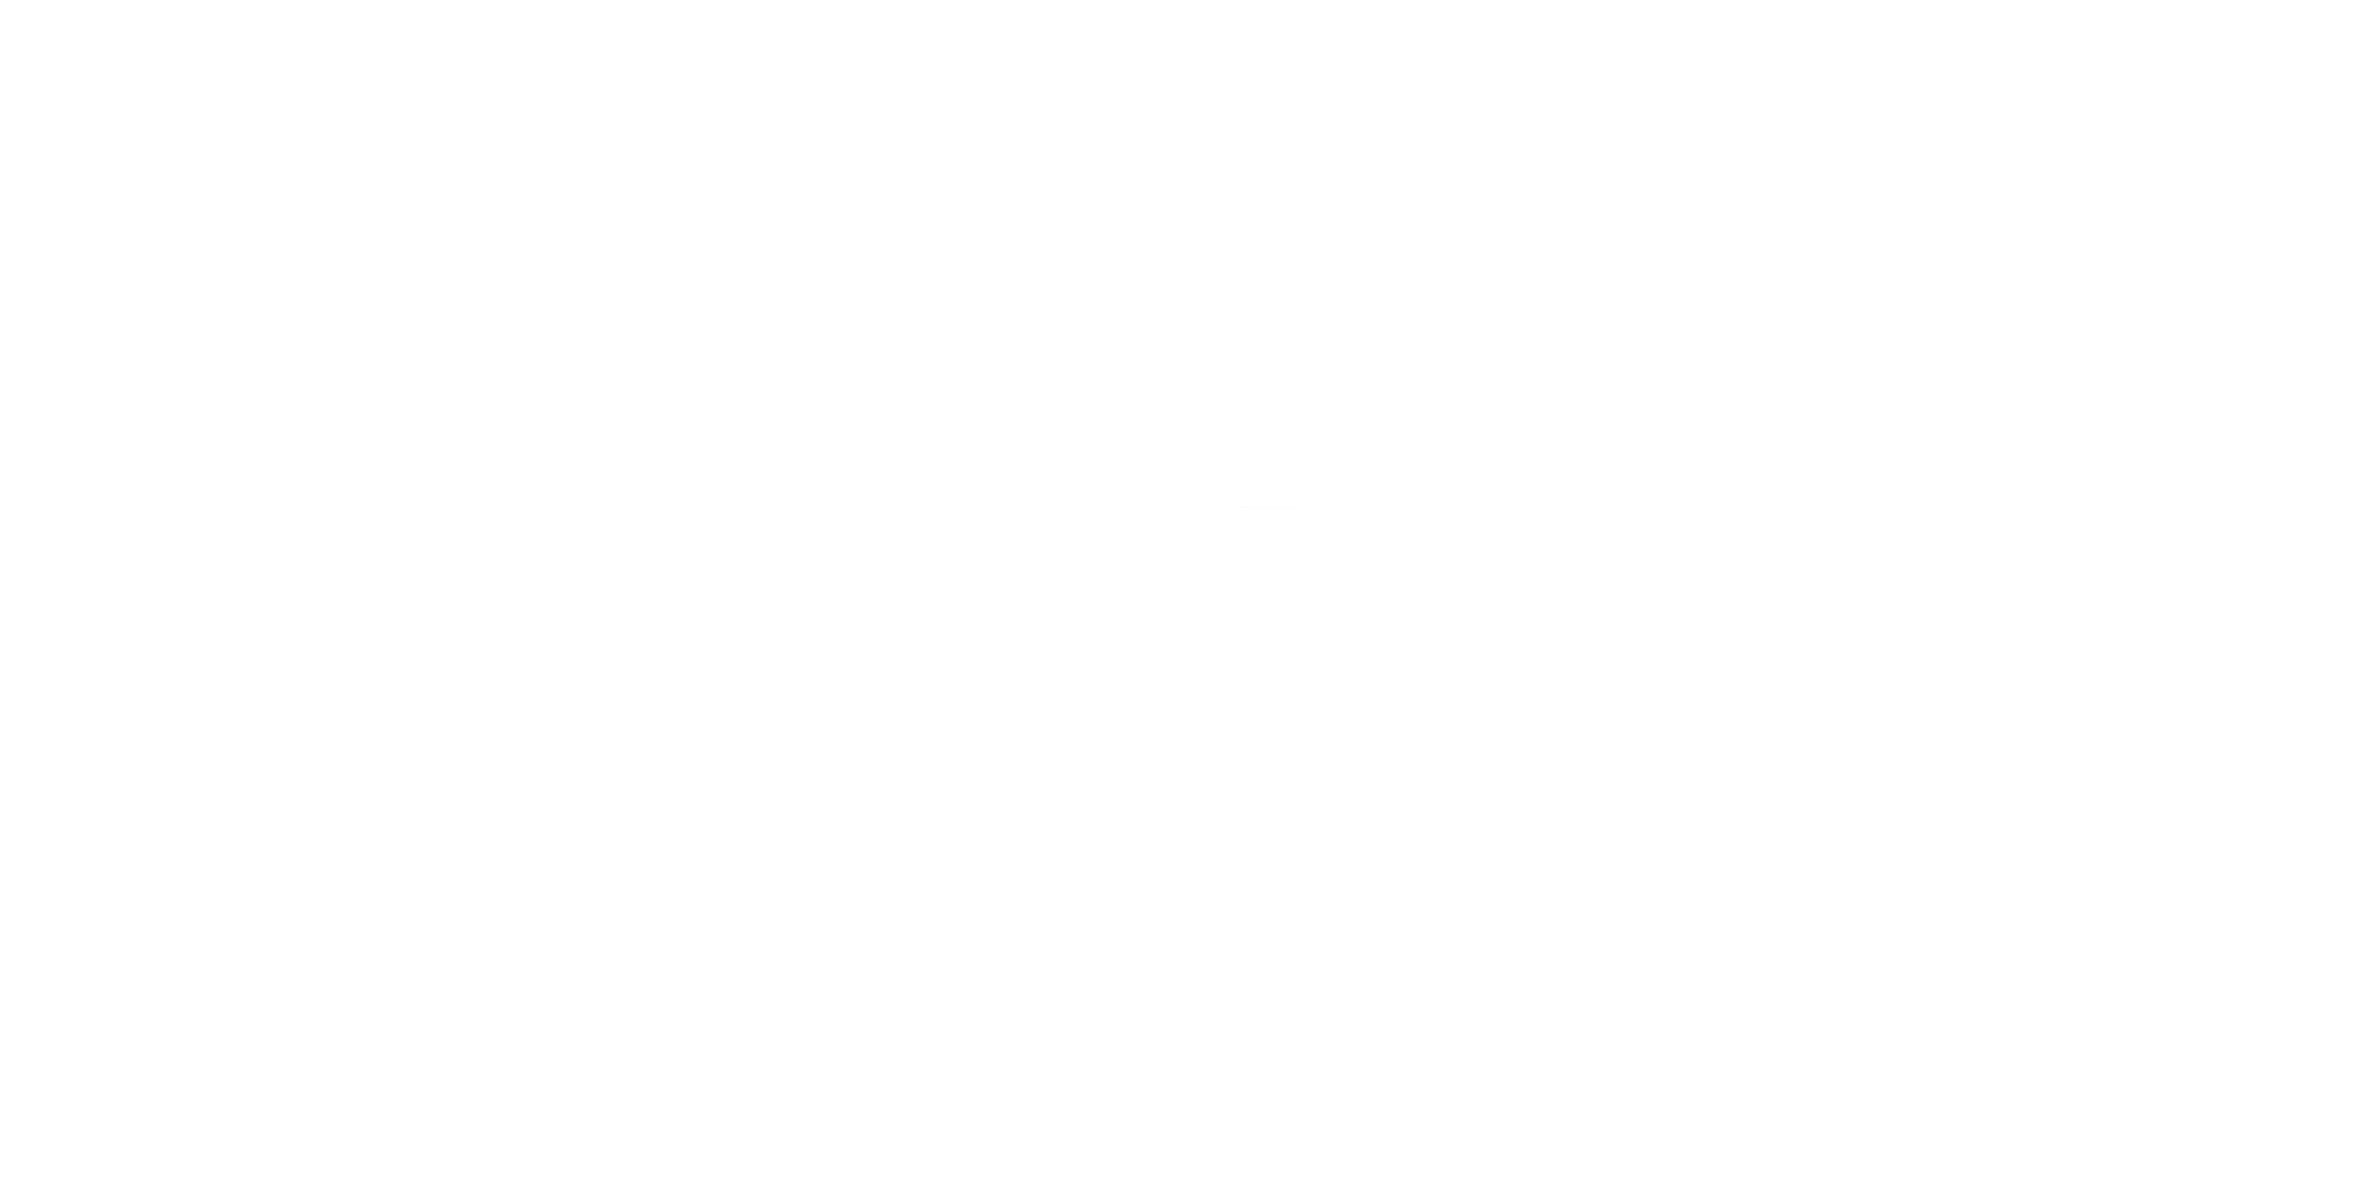 The Enel Green Power Logo